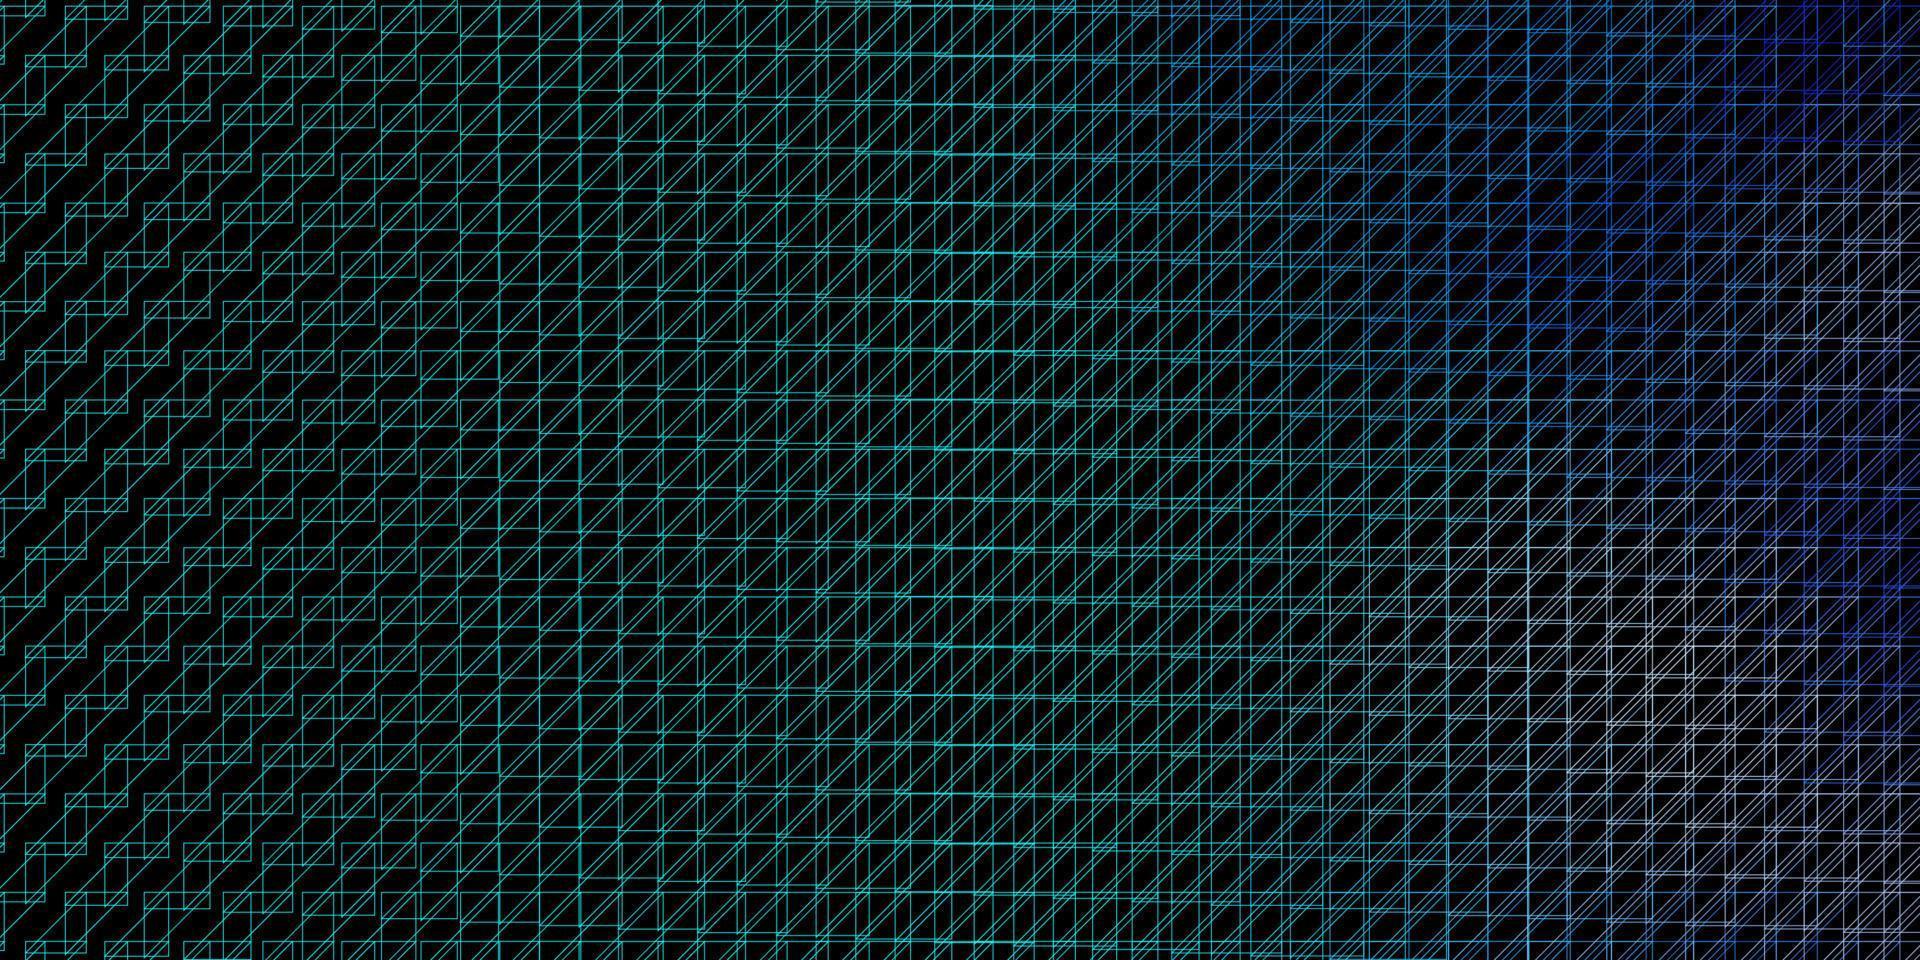 mörkrosa, blå vektorbakgrund med linjer. vektor